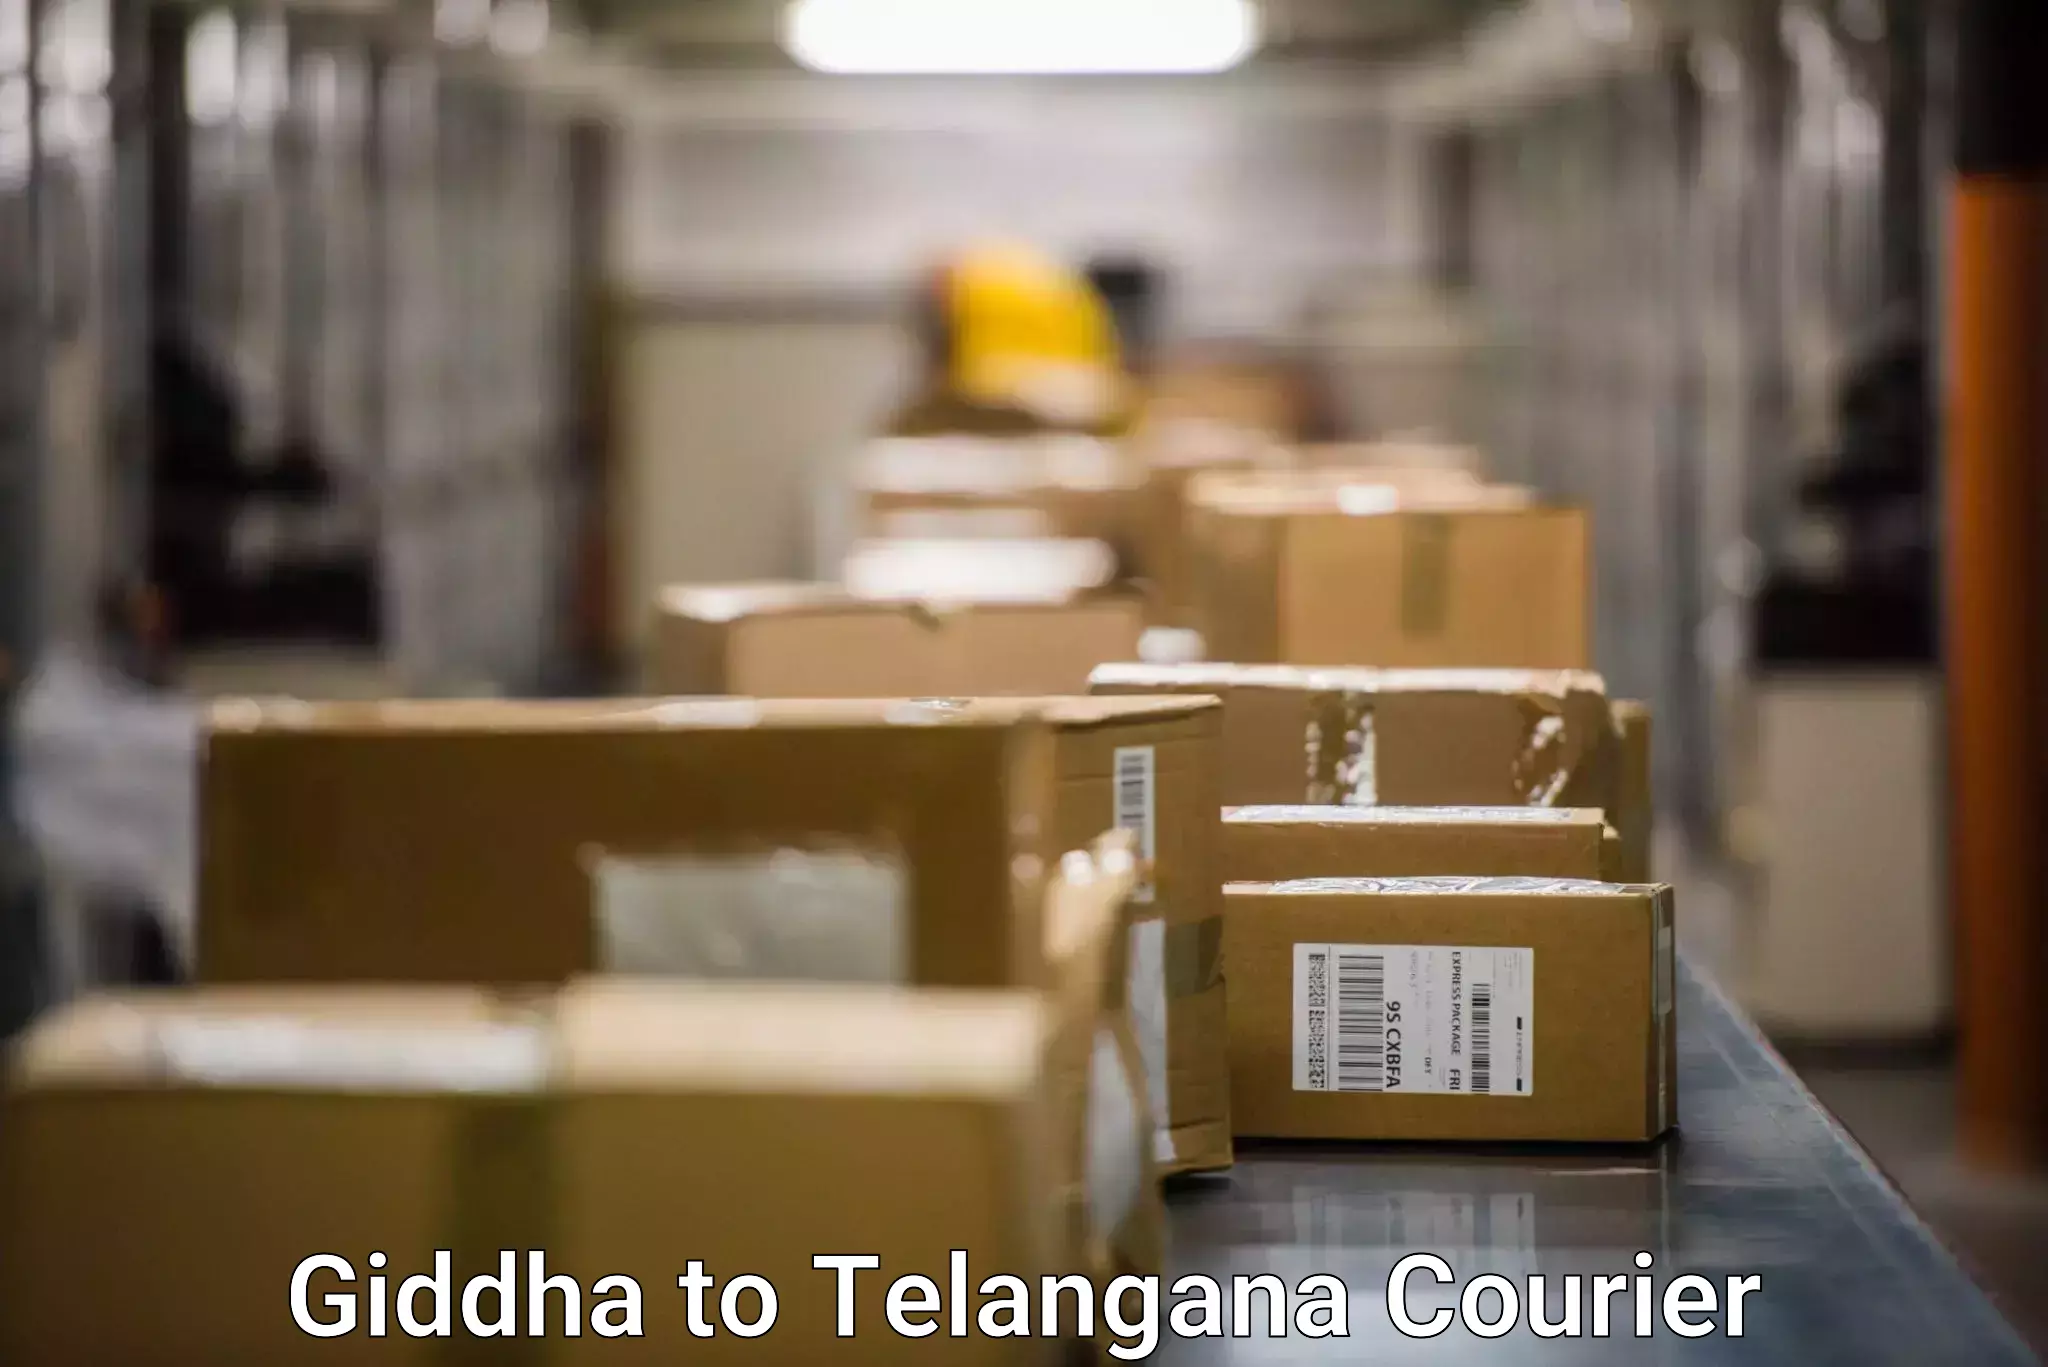 Express package services Giddha to Bhuvanagiri